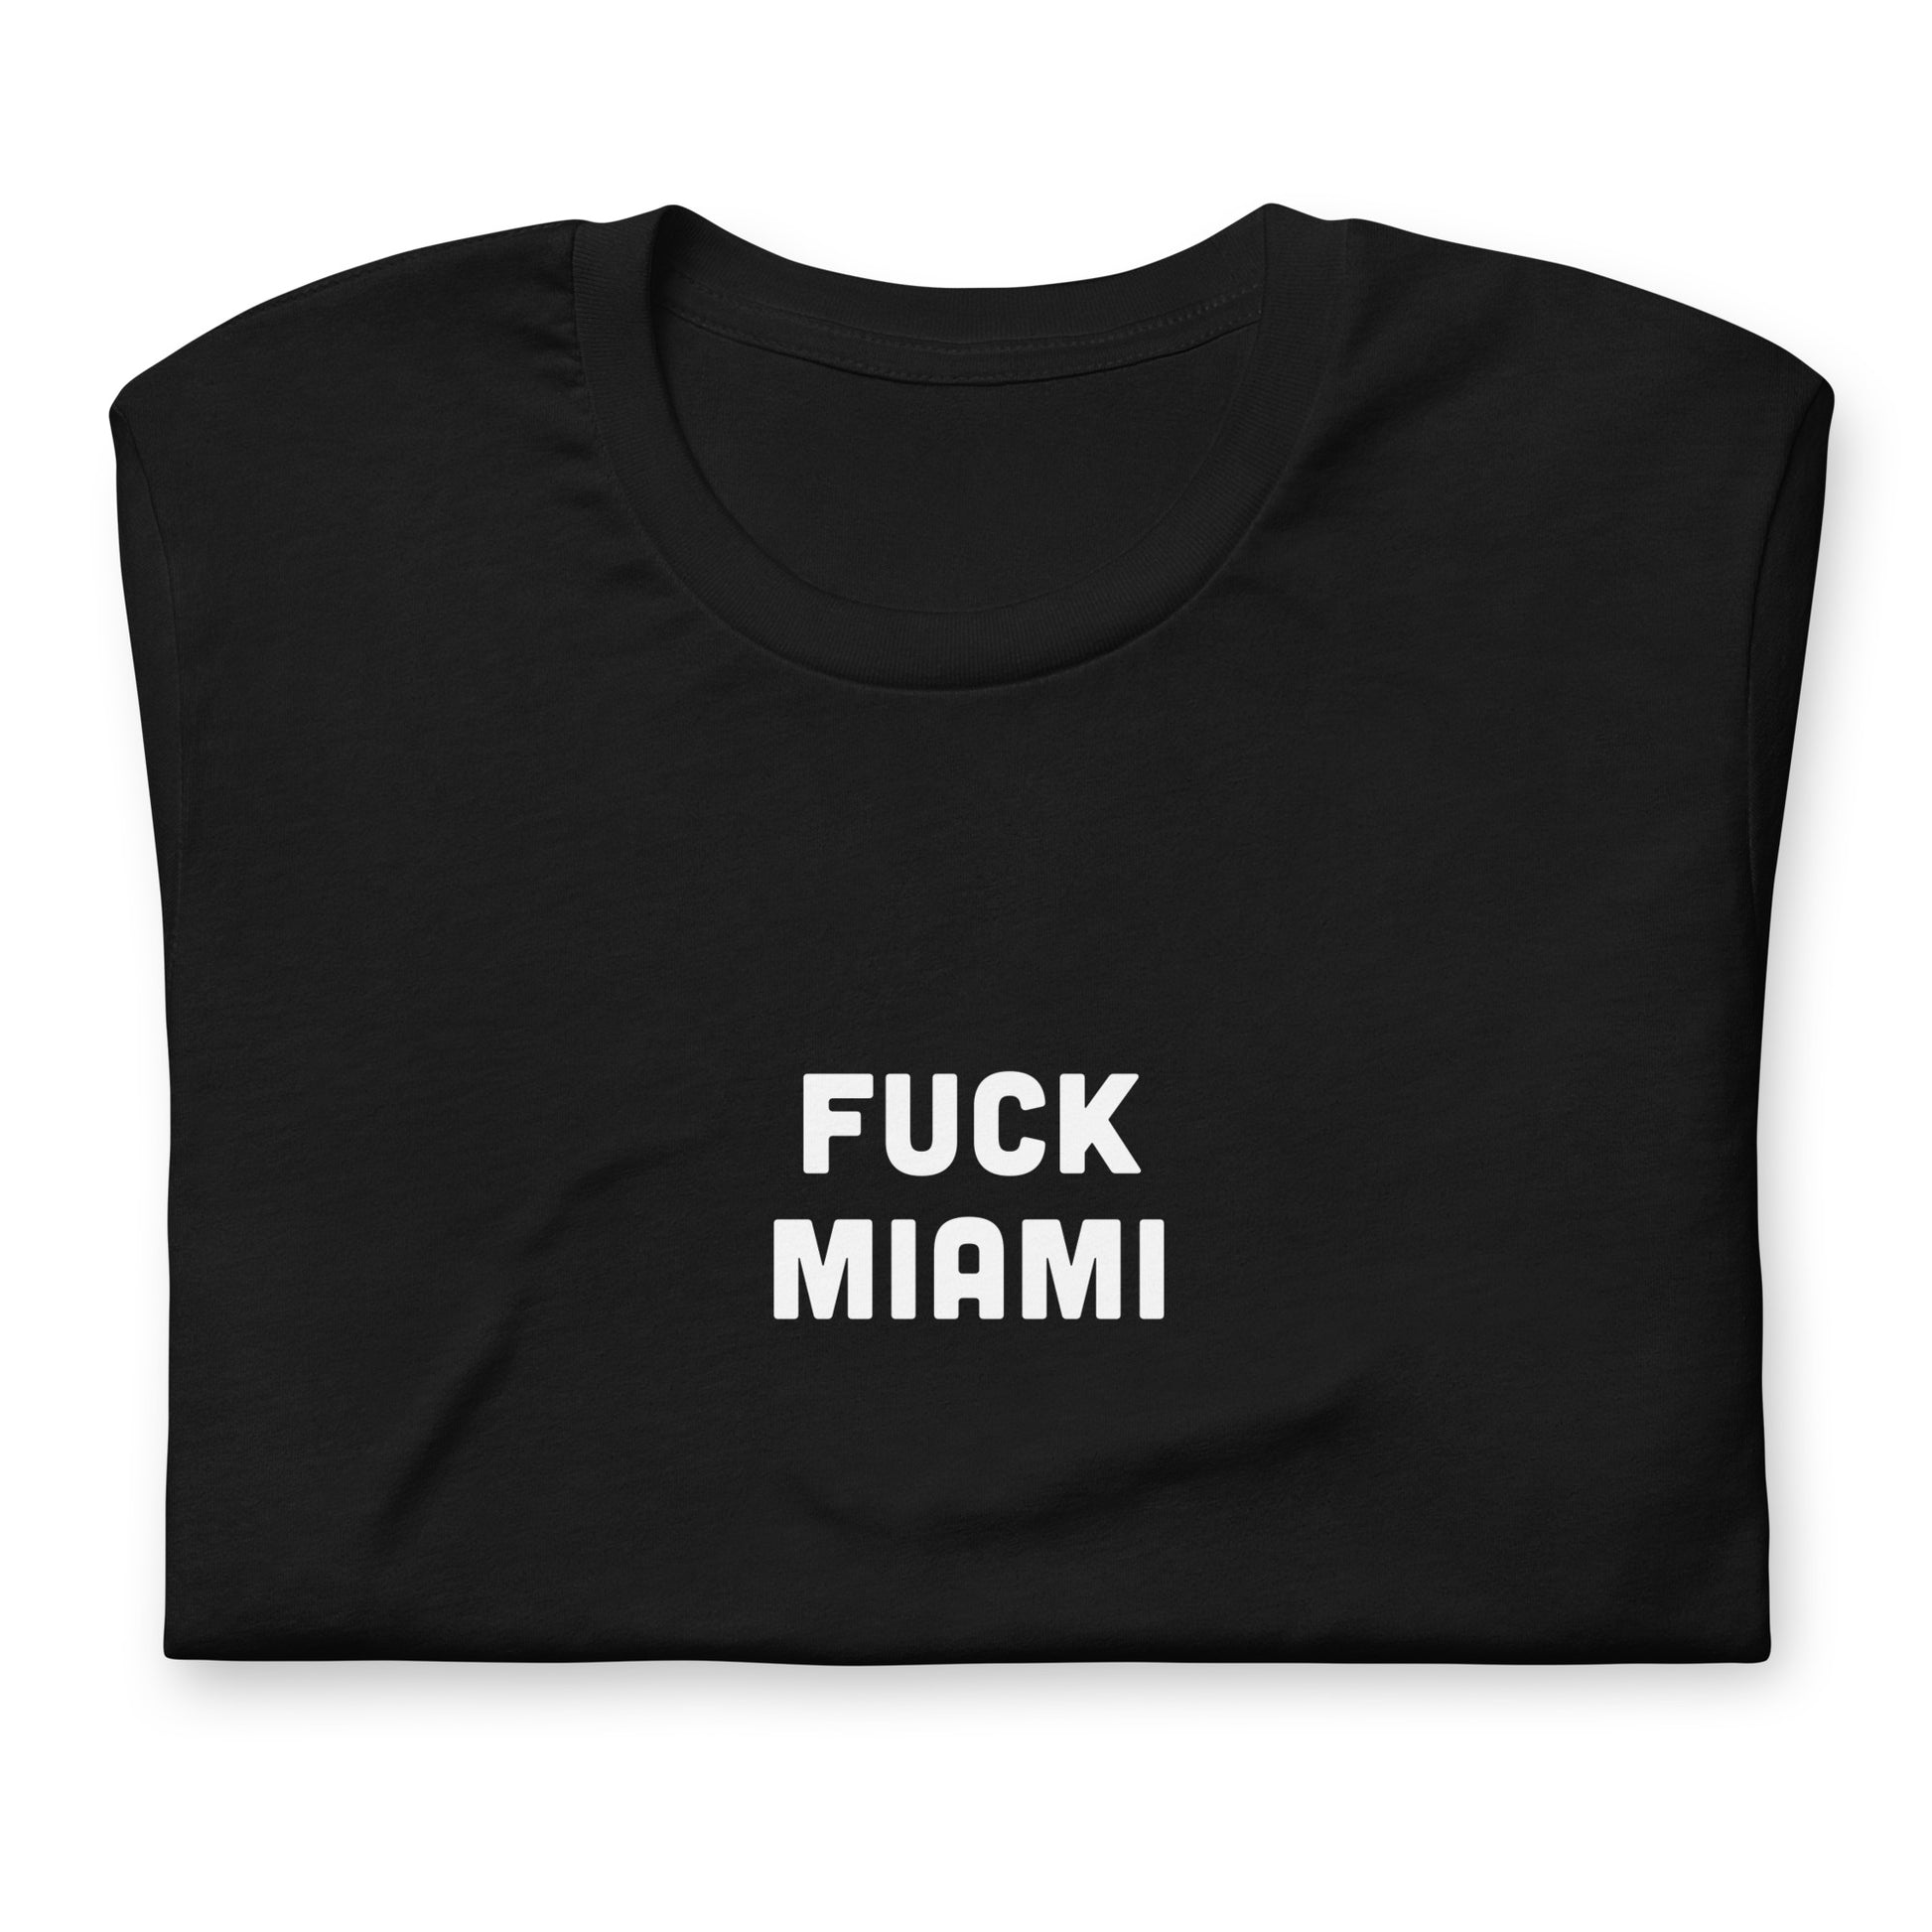 Fuck Miami T-Shirt Size 2XL Color Black